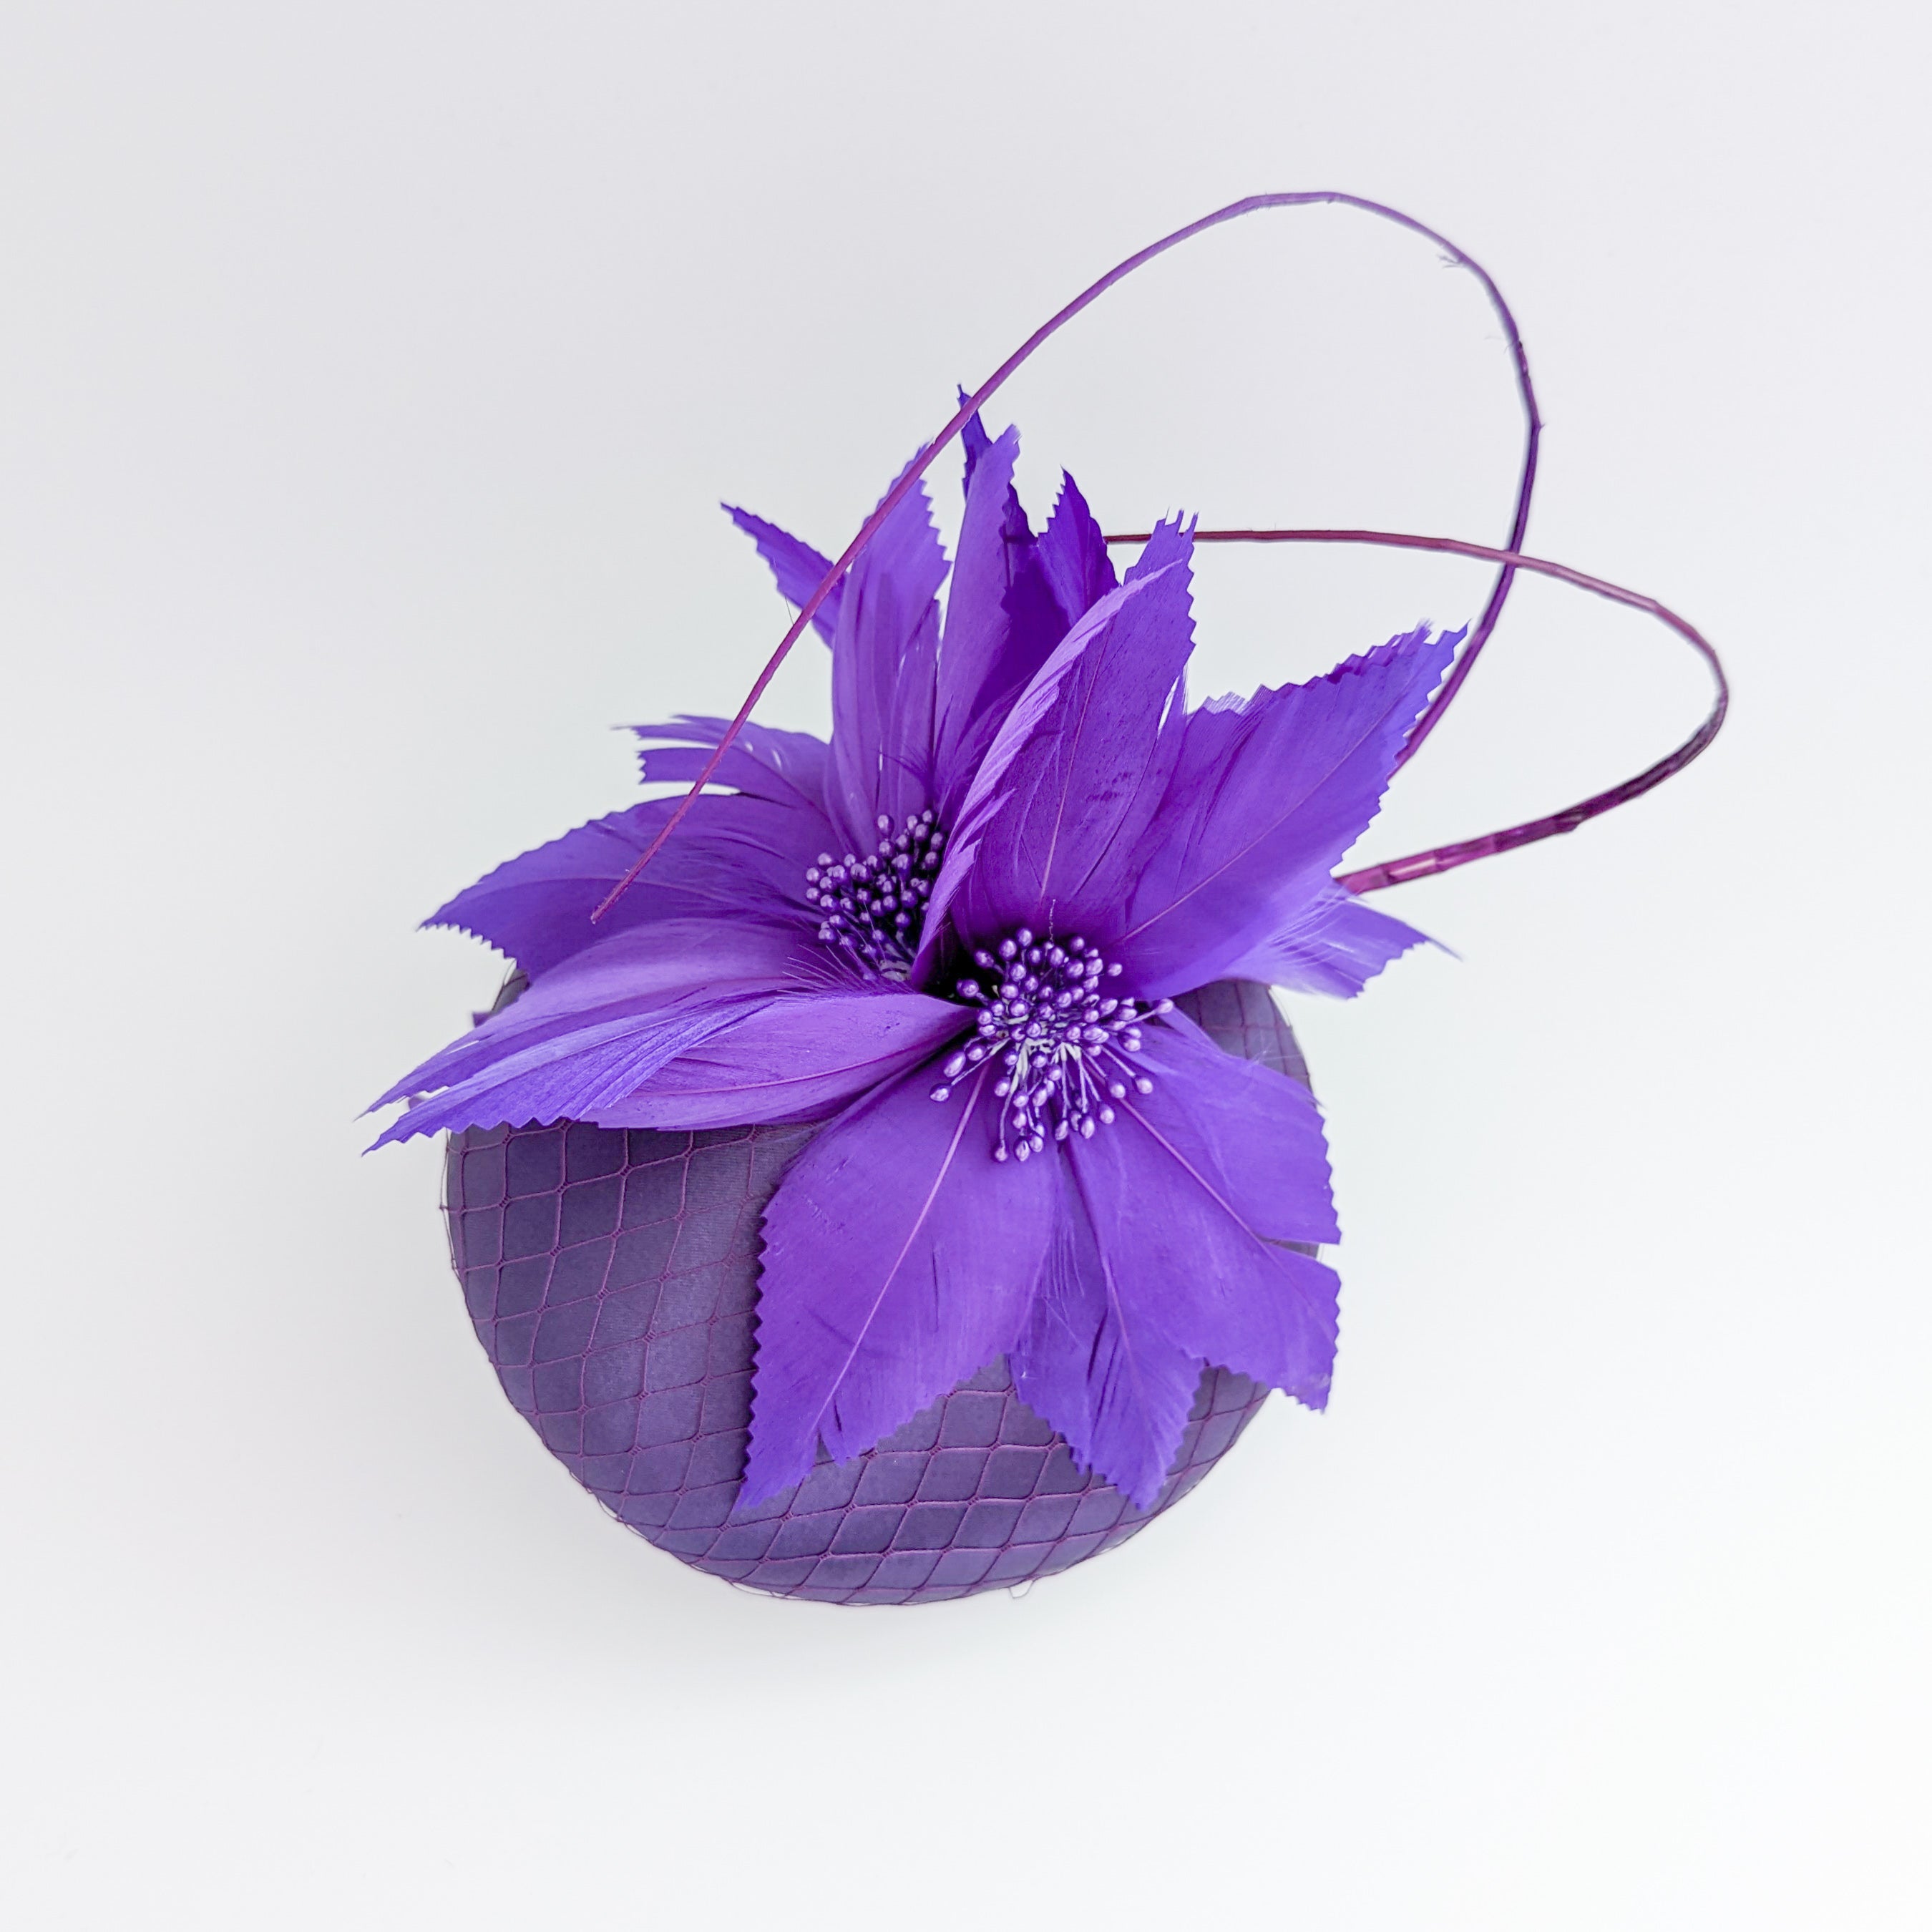 Cadbury purple feather satin fascinator hat